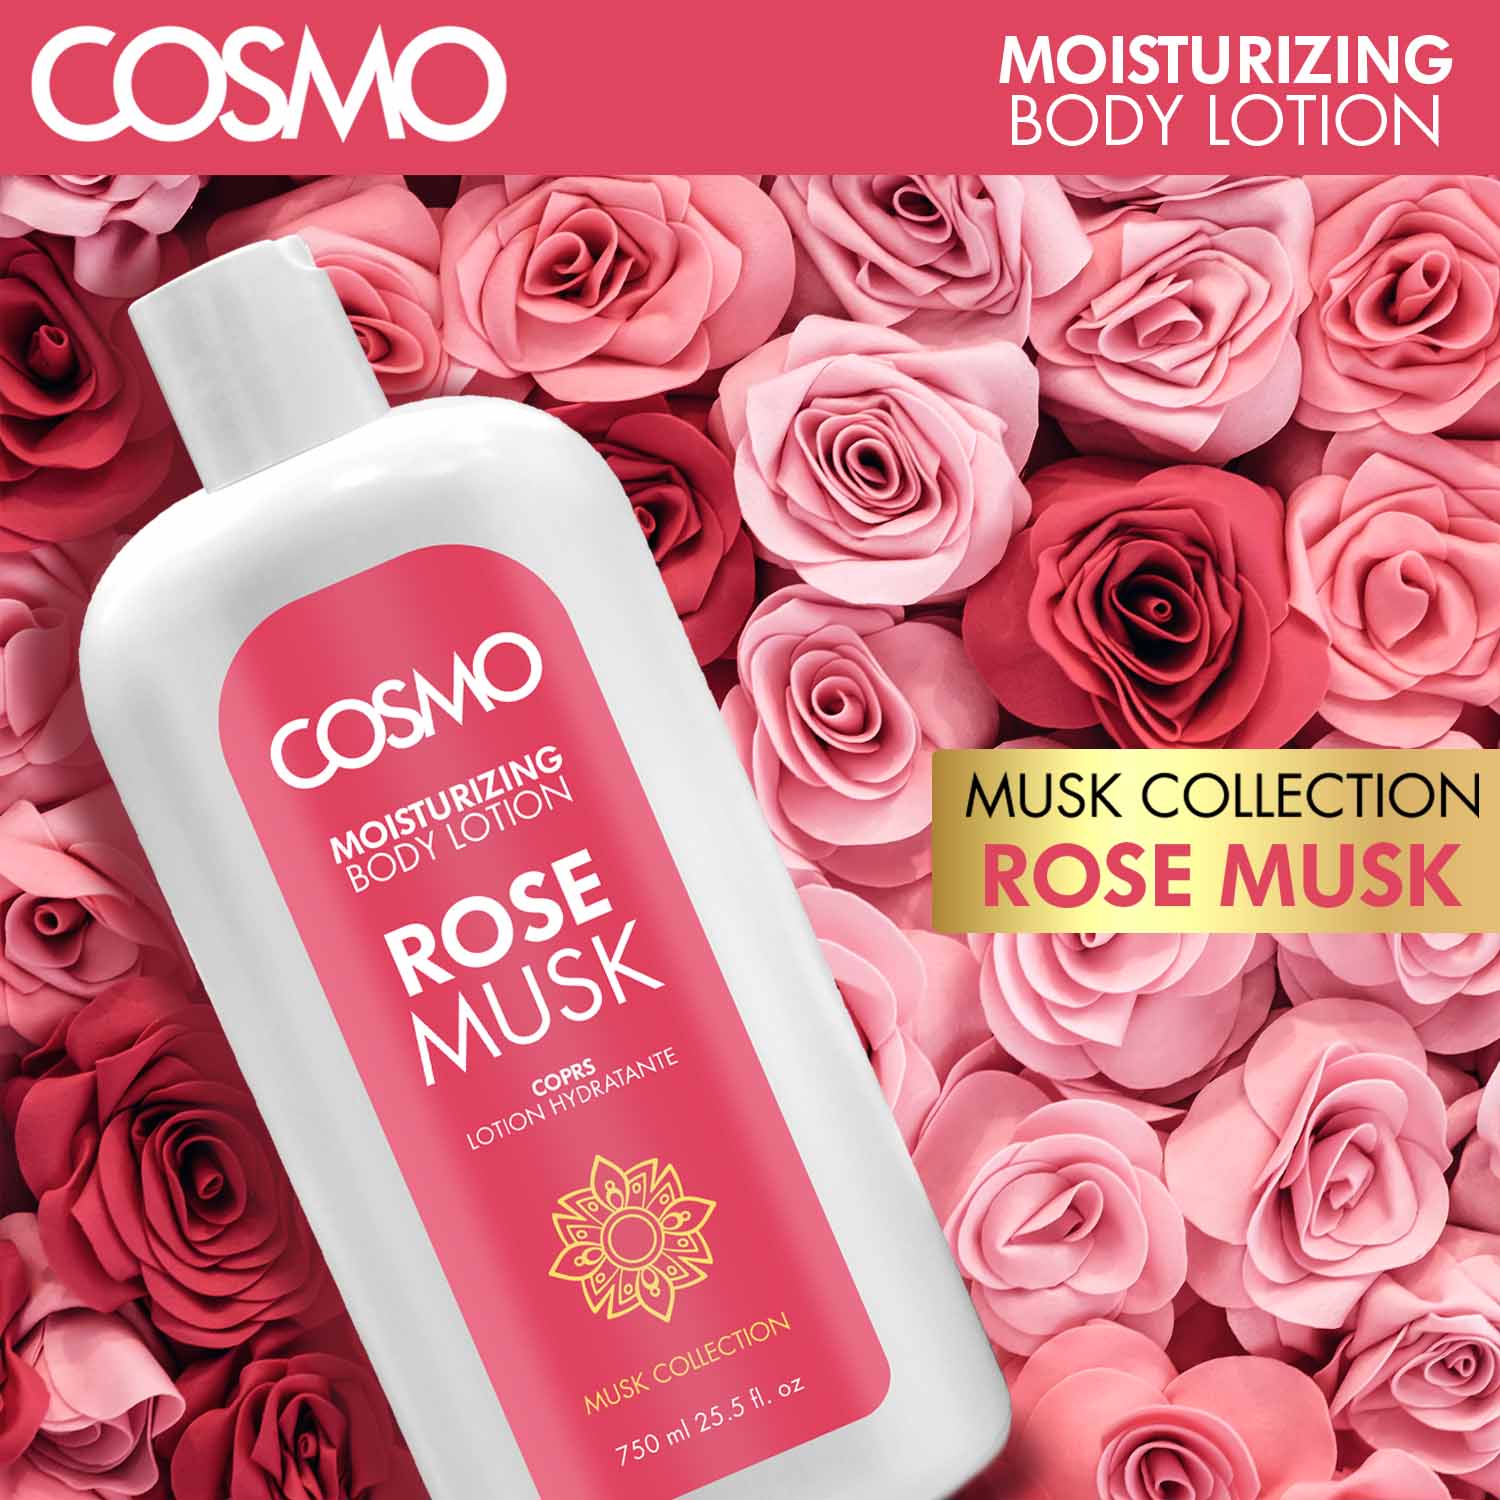 Rose Musk -Cosmo Moisturizing Body Lotion